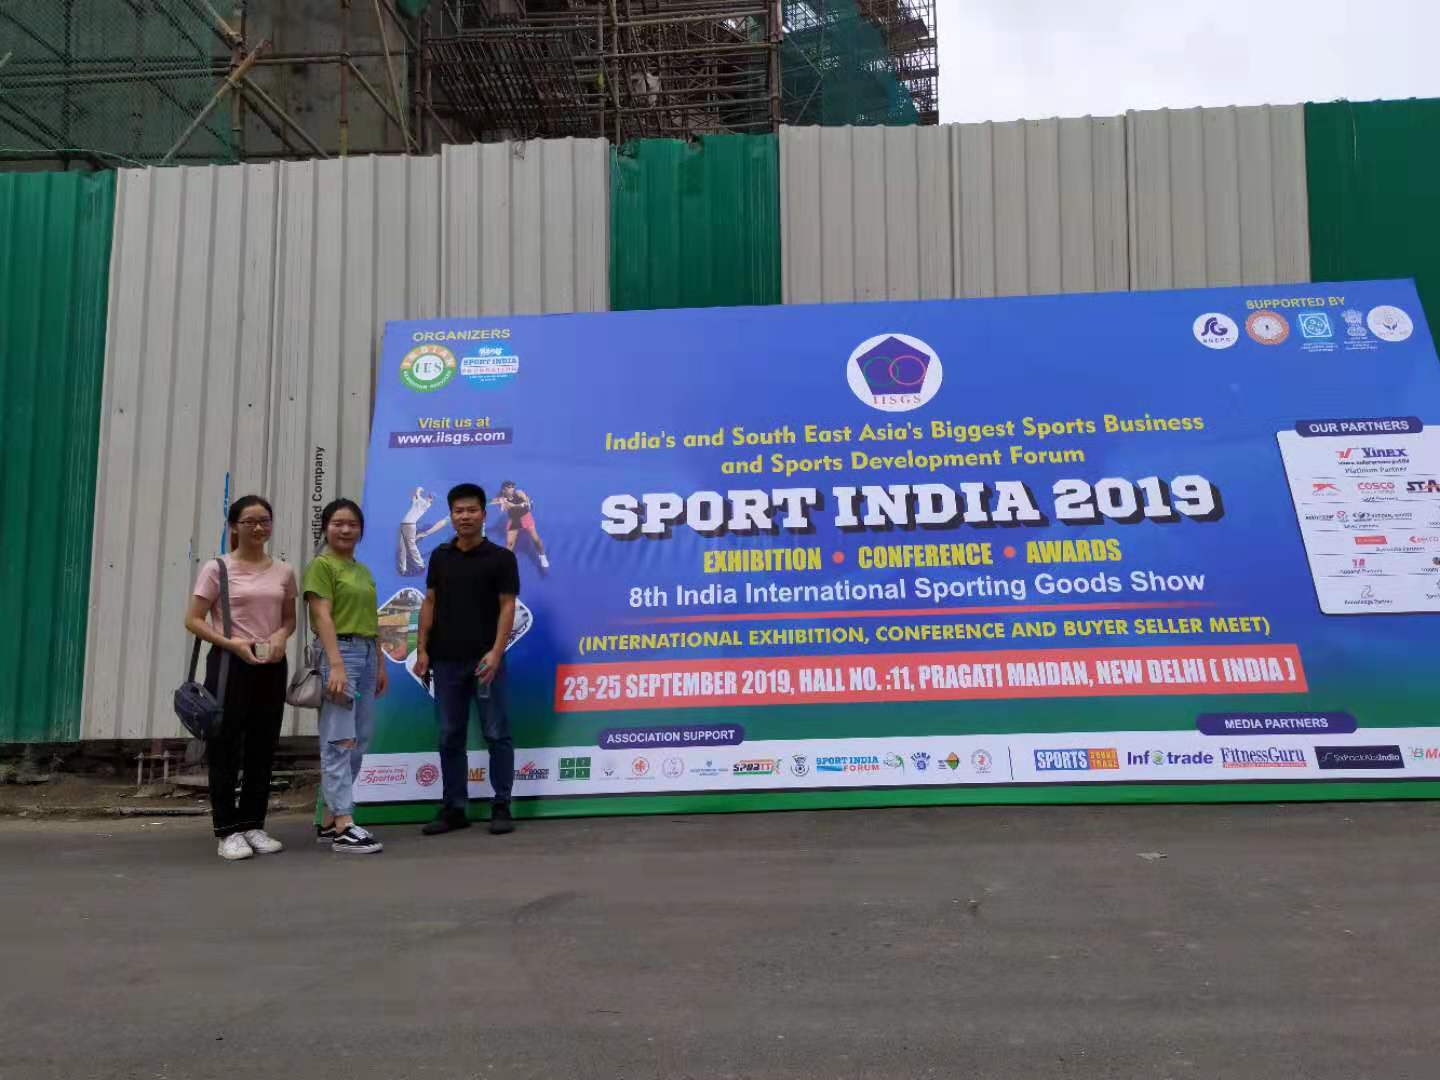 Sports India 2019